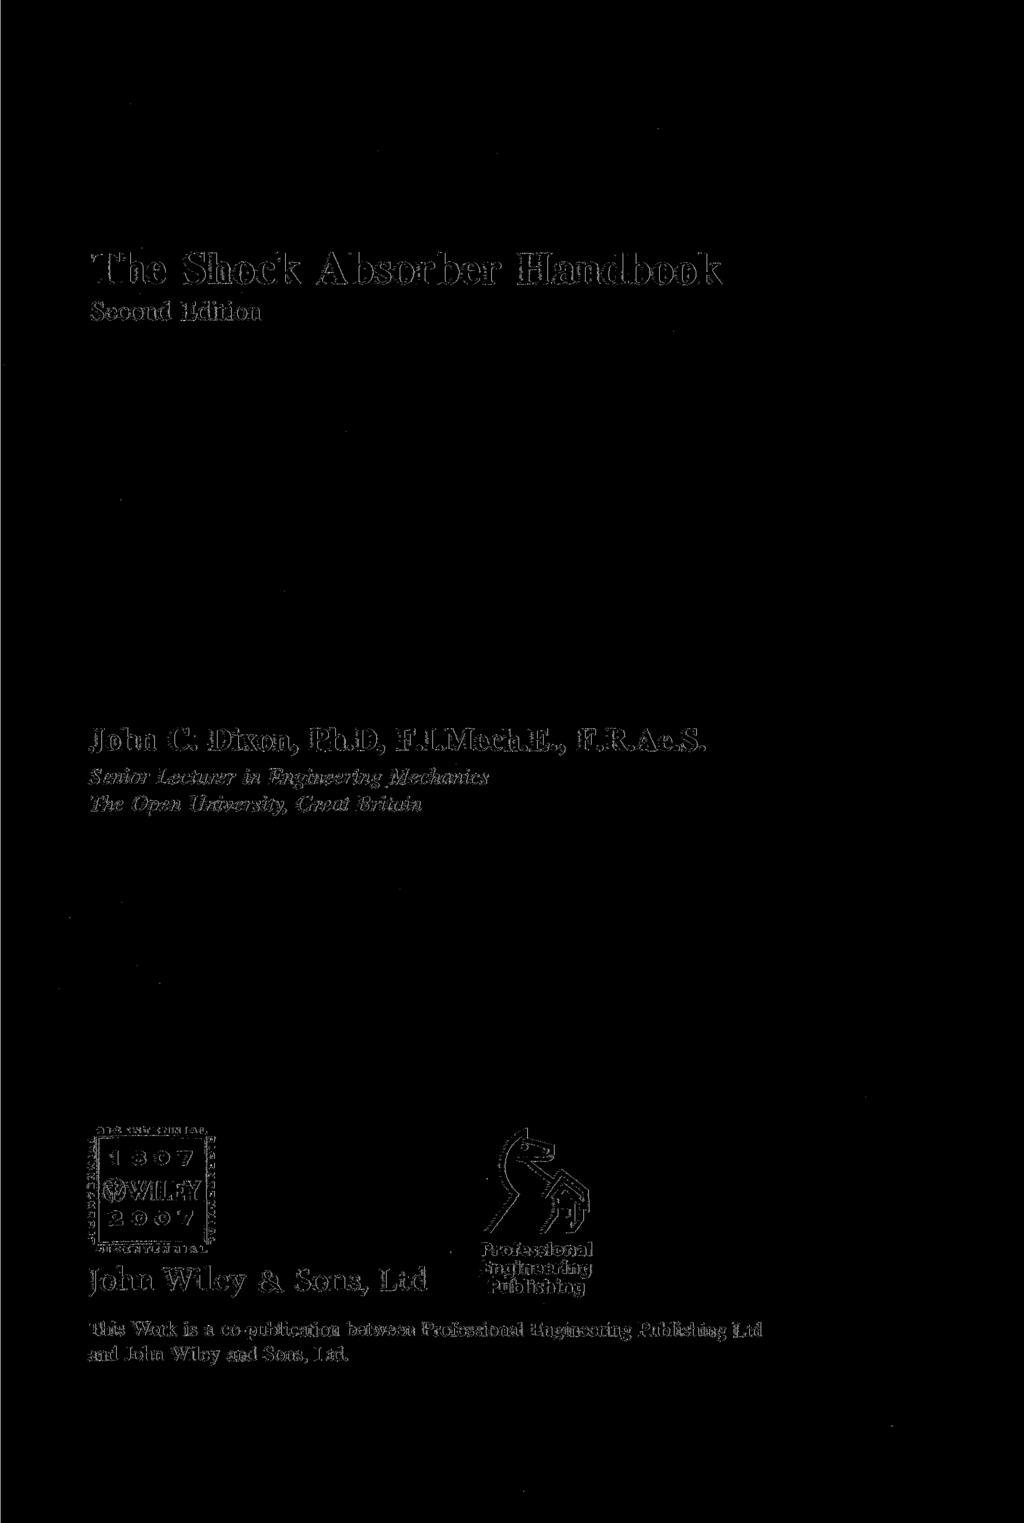 The Shock Absorber Handbook Second Edition John C. Dixon, Ph.D, F.I.Mech.E., F.R.Ae.S. Senior Lecturer in Engineering Mechanics The Open University, Great Britain IICIUTIHHIIL BICINTINNIIM.